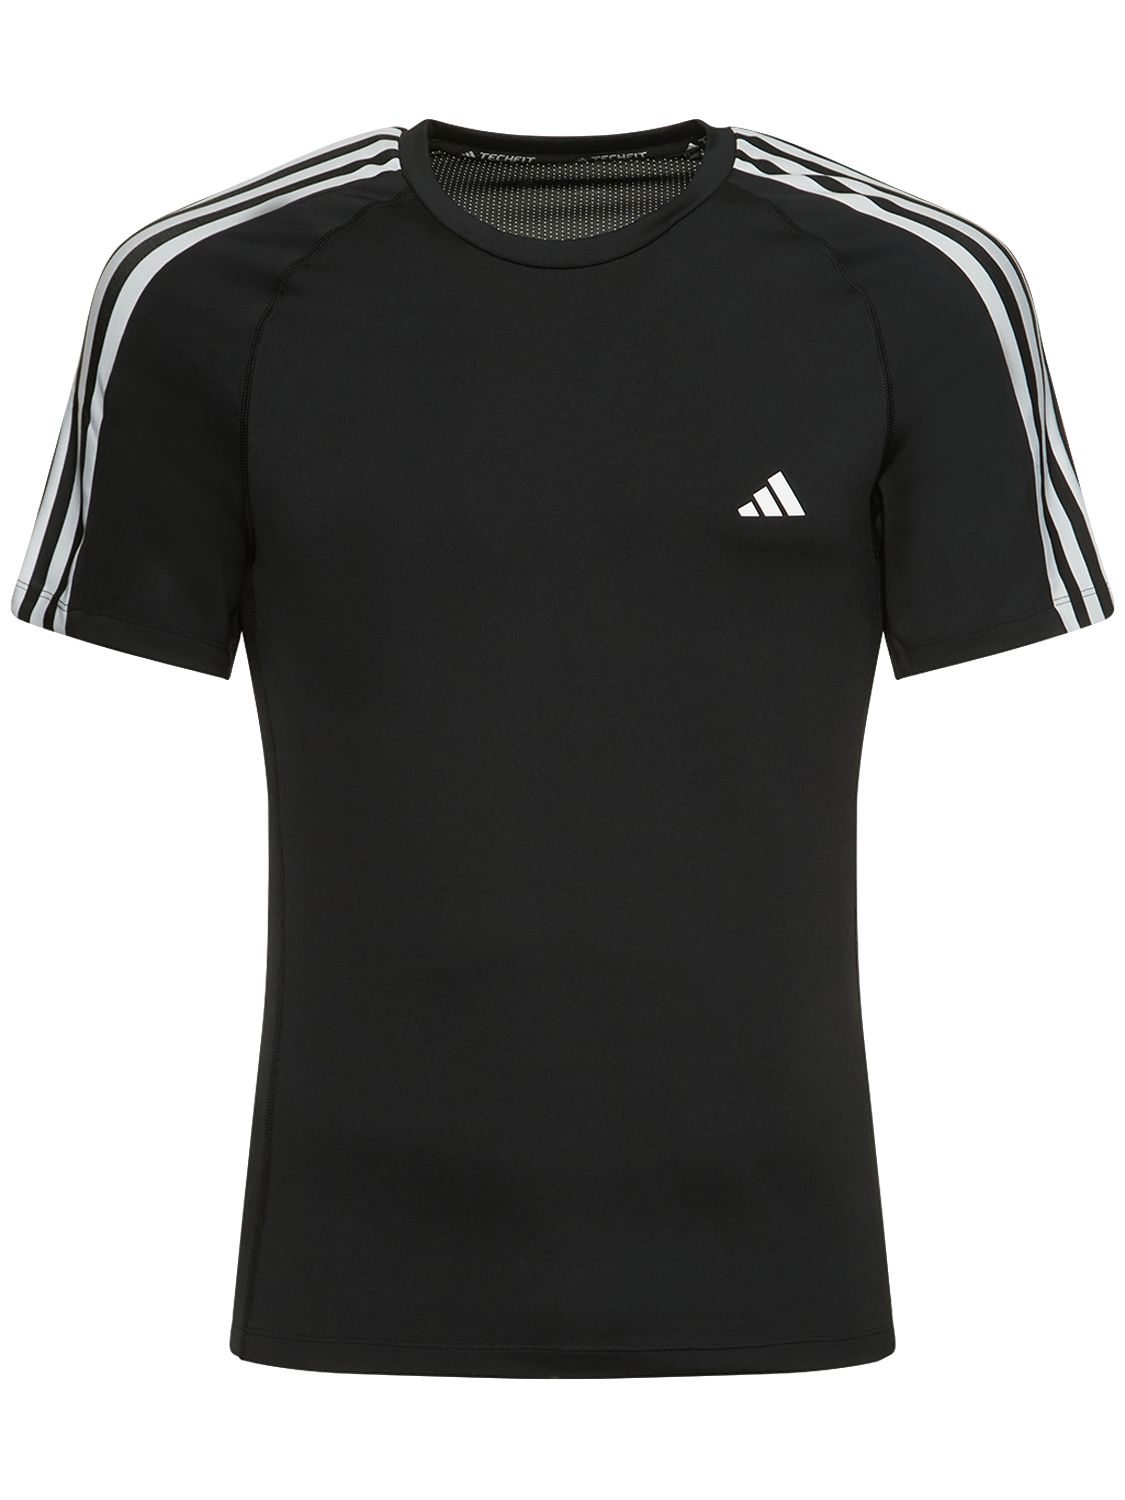 Image of 3 Stripes Tech T-shirt